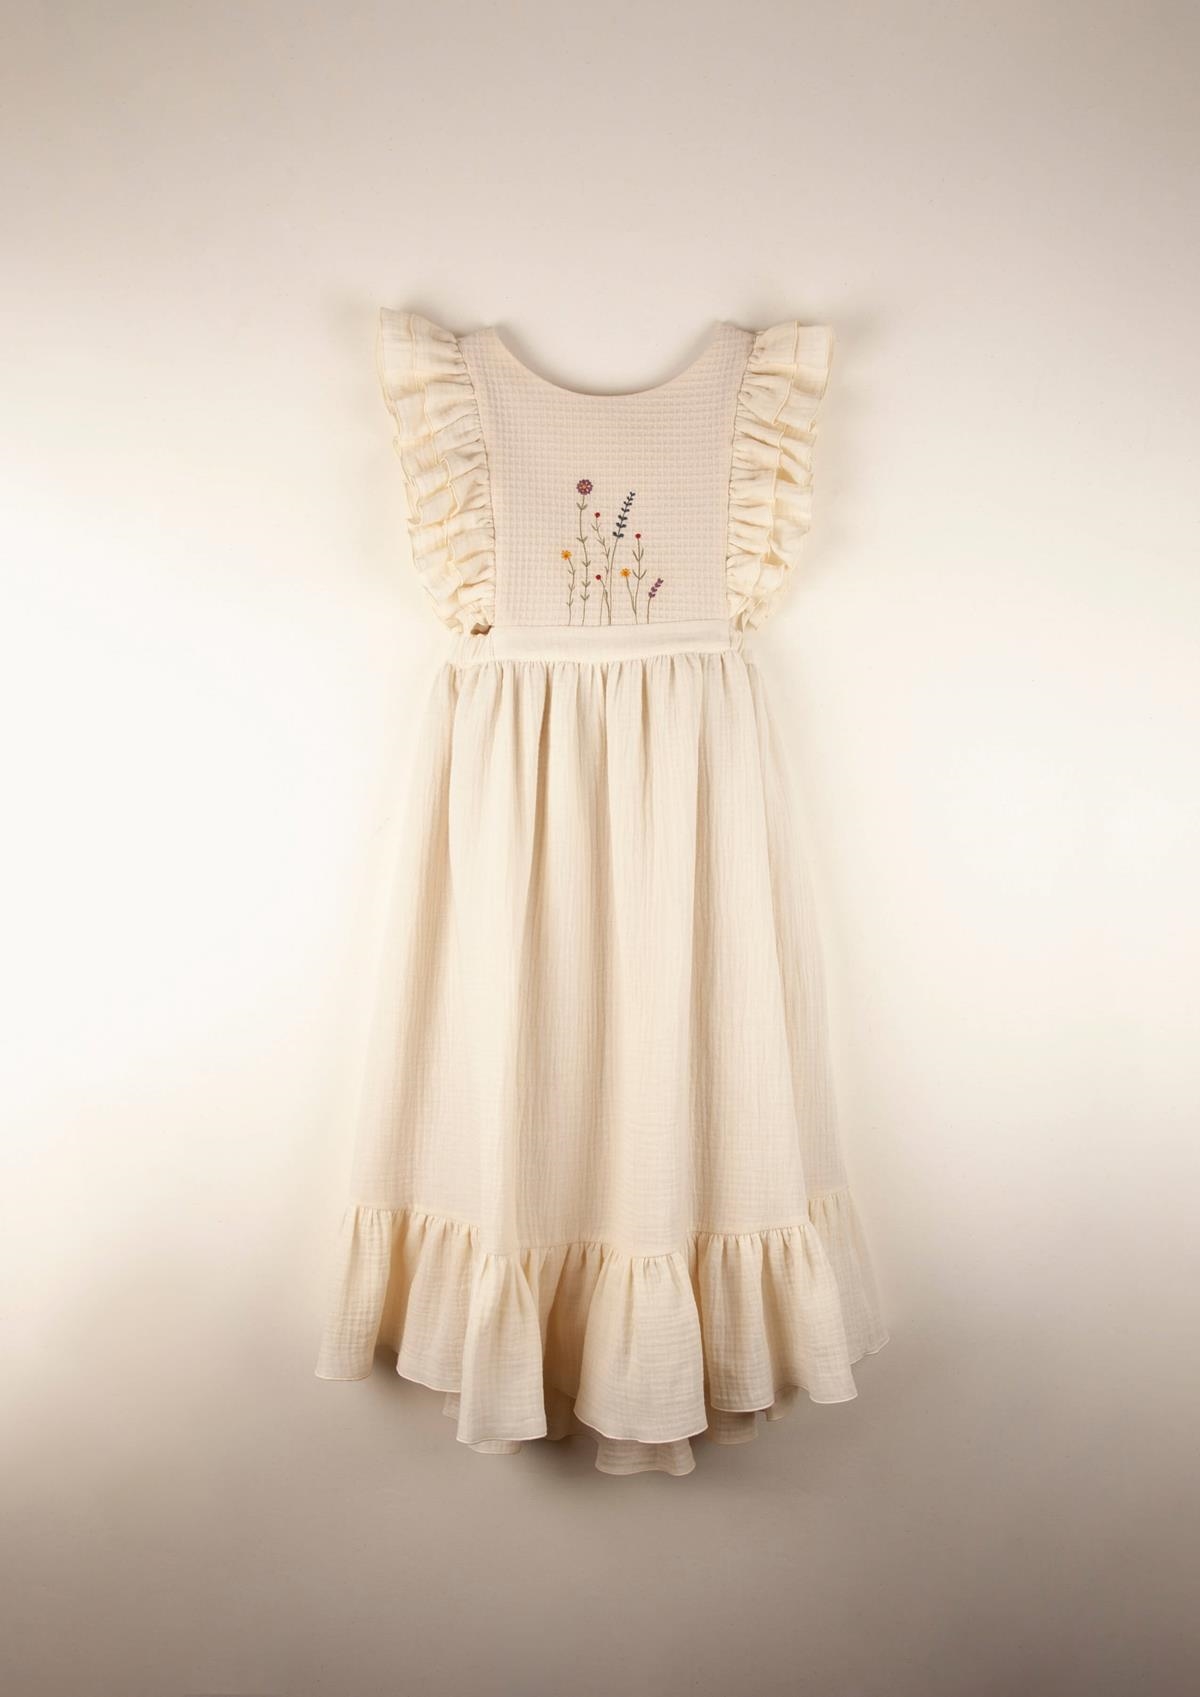 Mod.34.4 Off-white organic bibbed dress with embroidery | SS22 Mod.34.4 Off-white organic bibbed dress with embroidery | 1